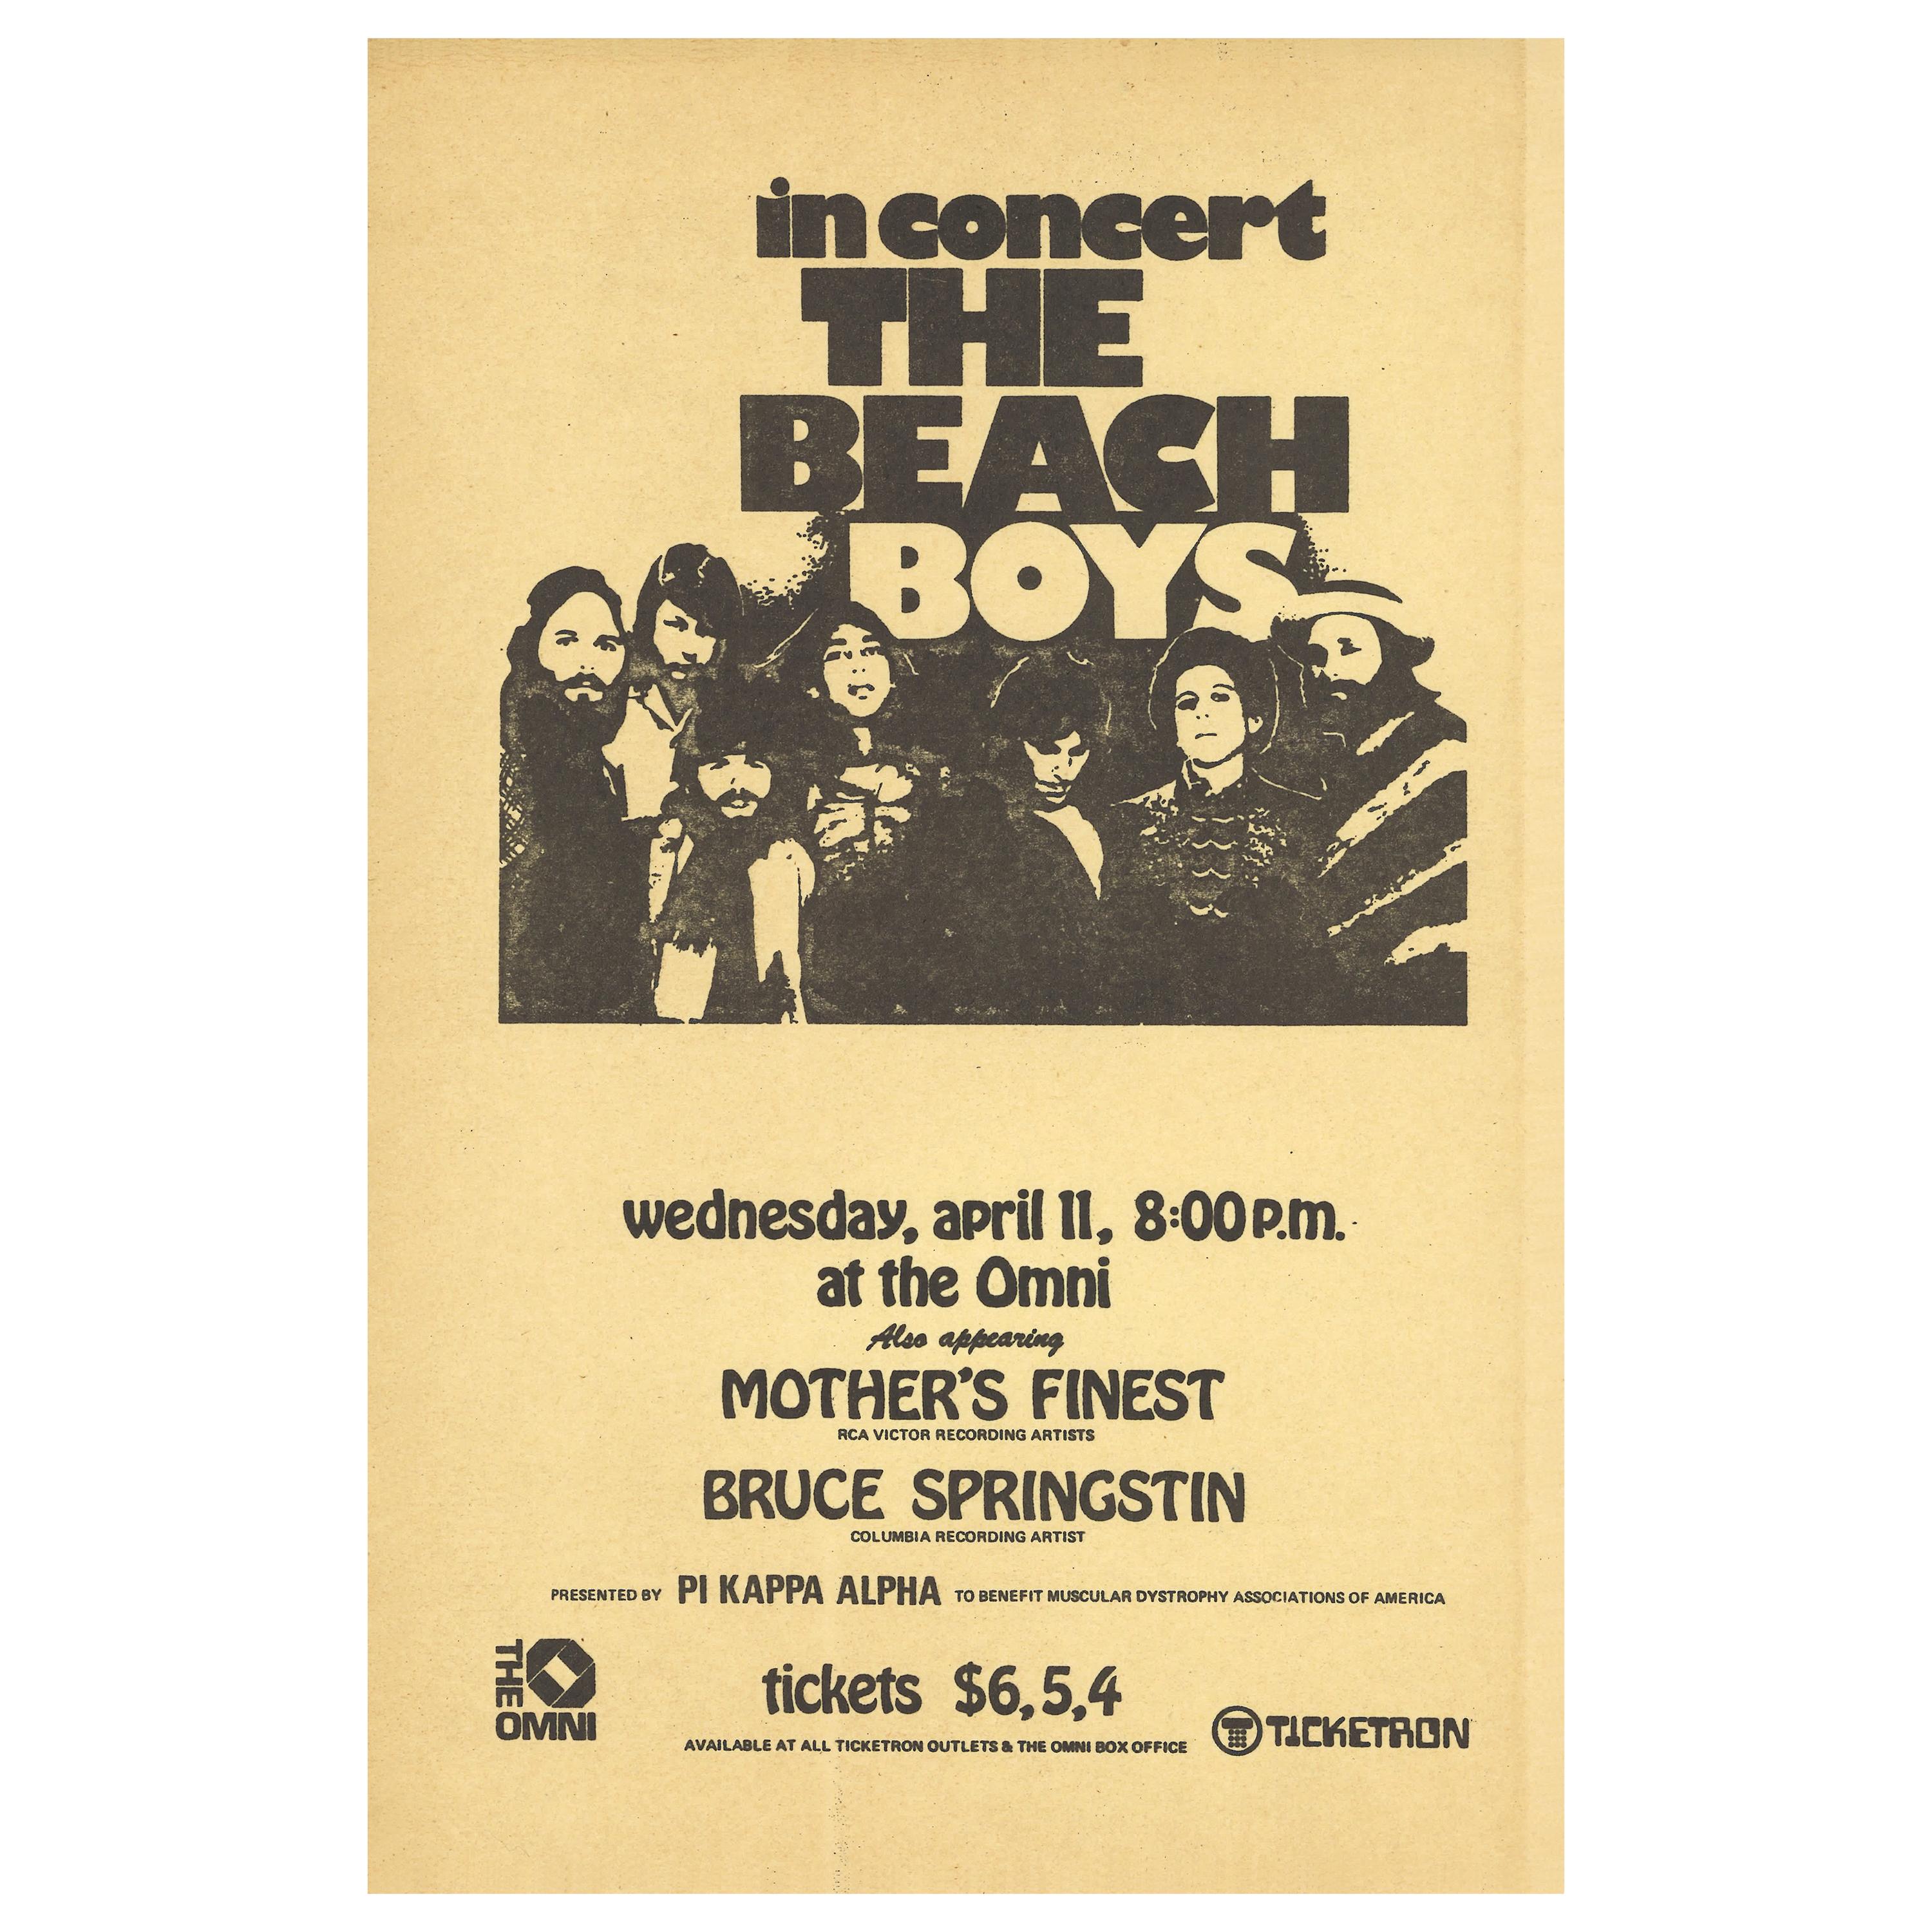 The Beach Boys and Bruce Springsteen Original Concert Handbill, Atlanta, 1973